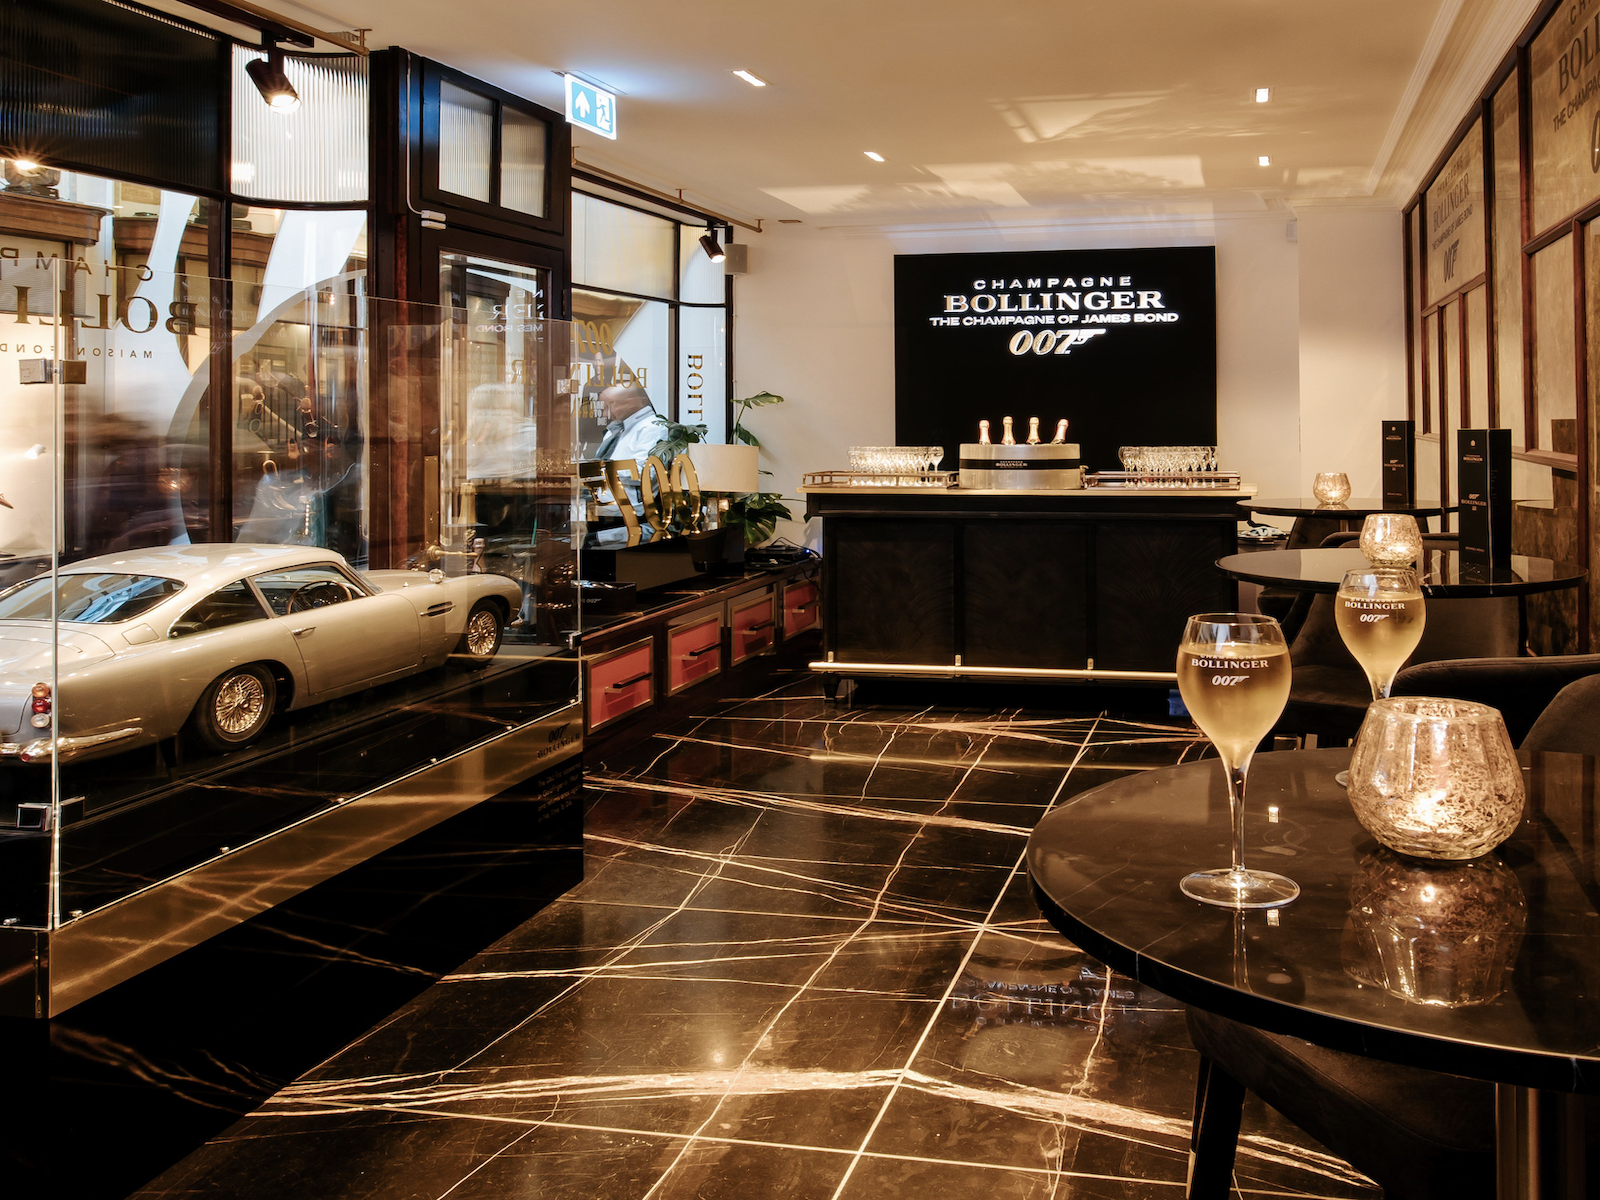 The new 007 Bollinger Bar in London's Burlington Arcade.&nbsp;